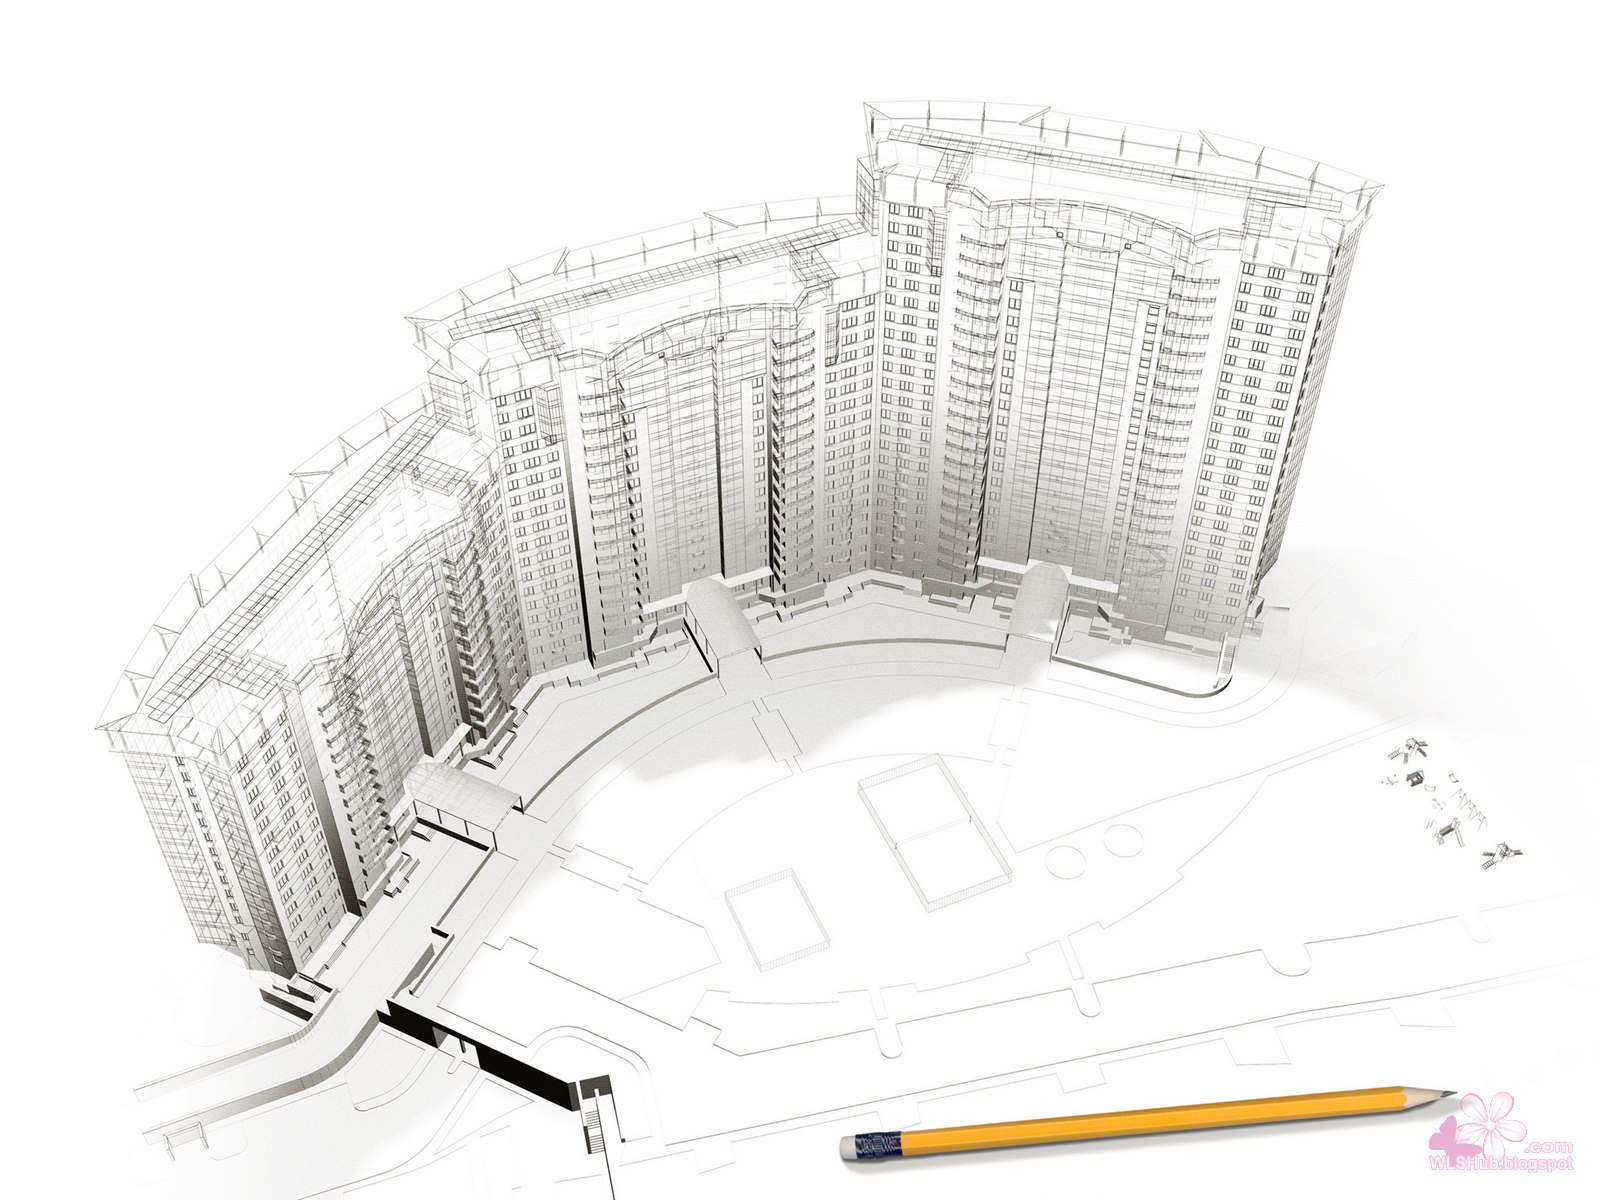 prepare building design ii to convey design ideas and technical 1600x1200